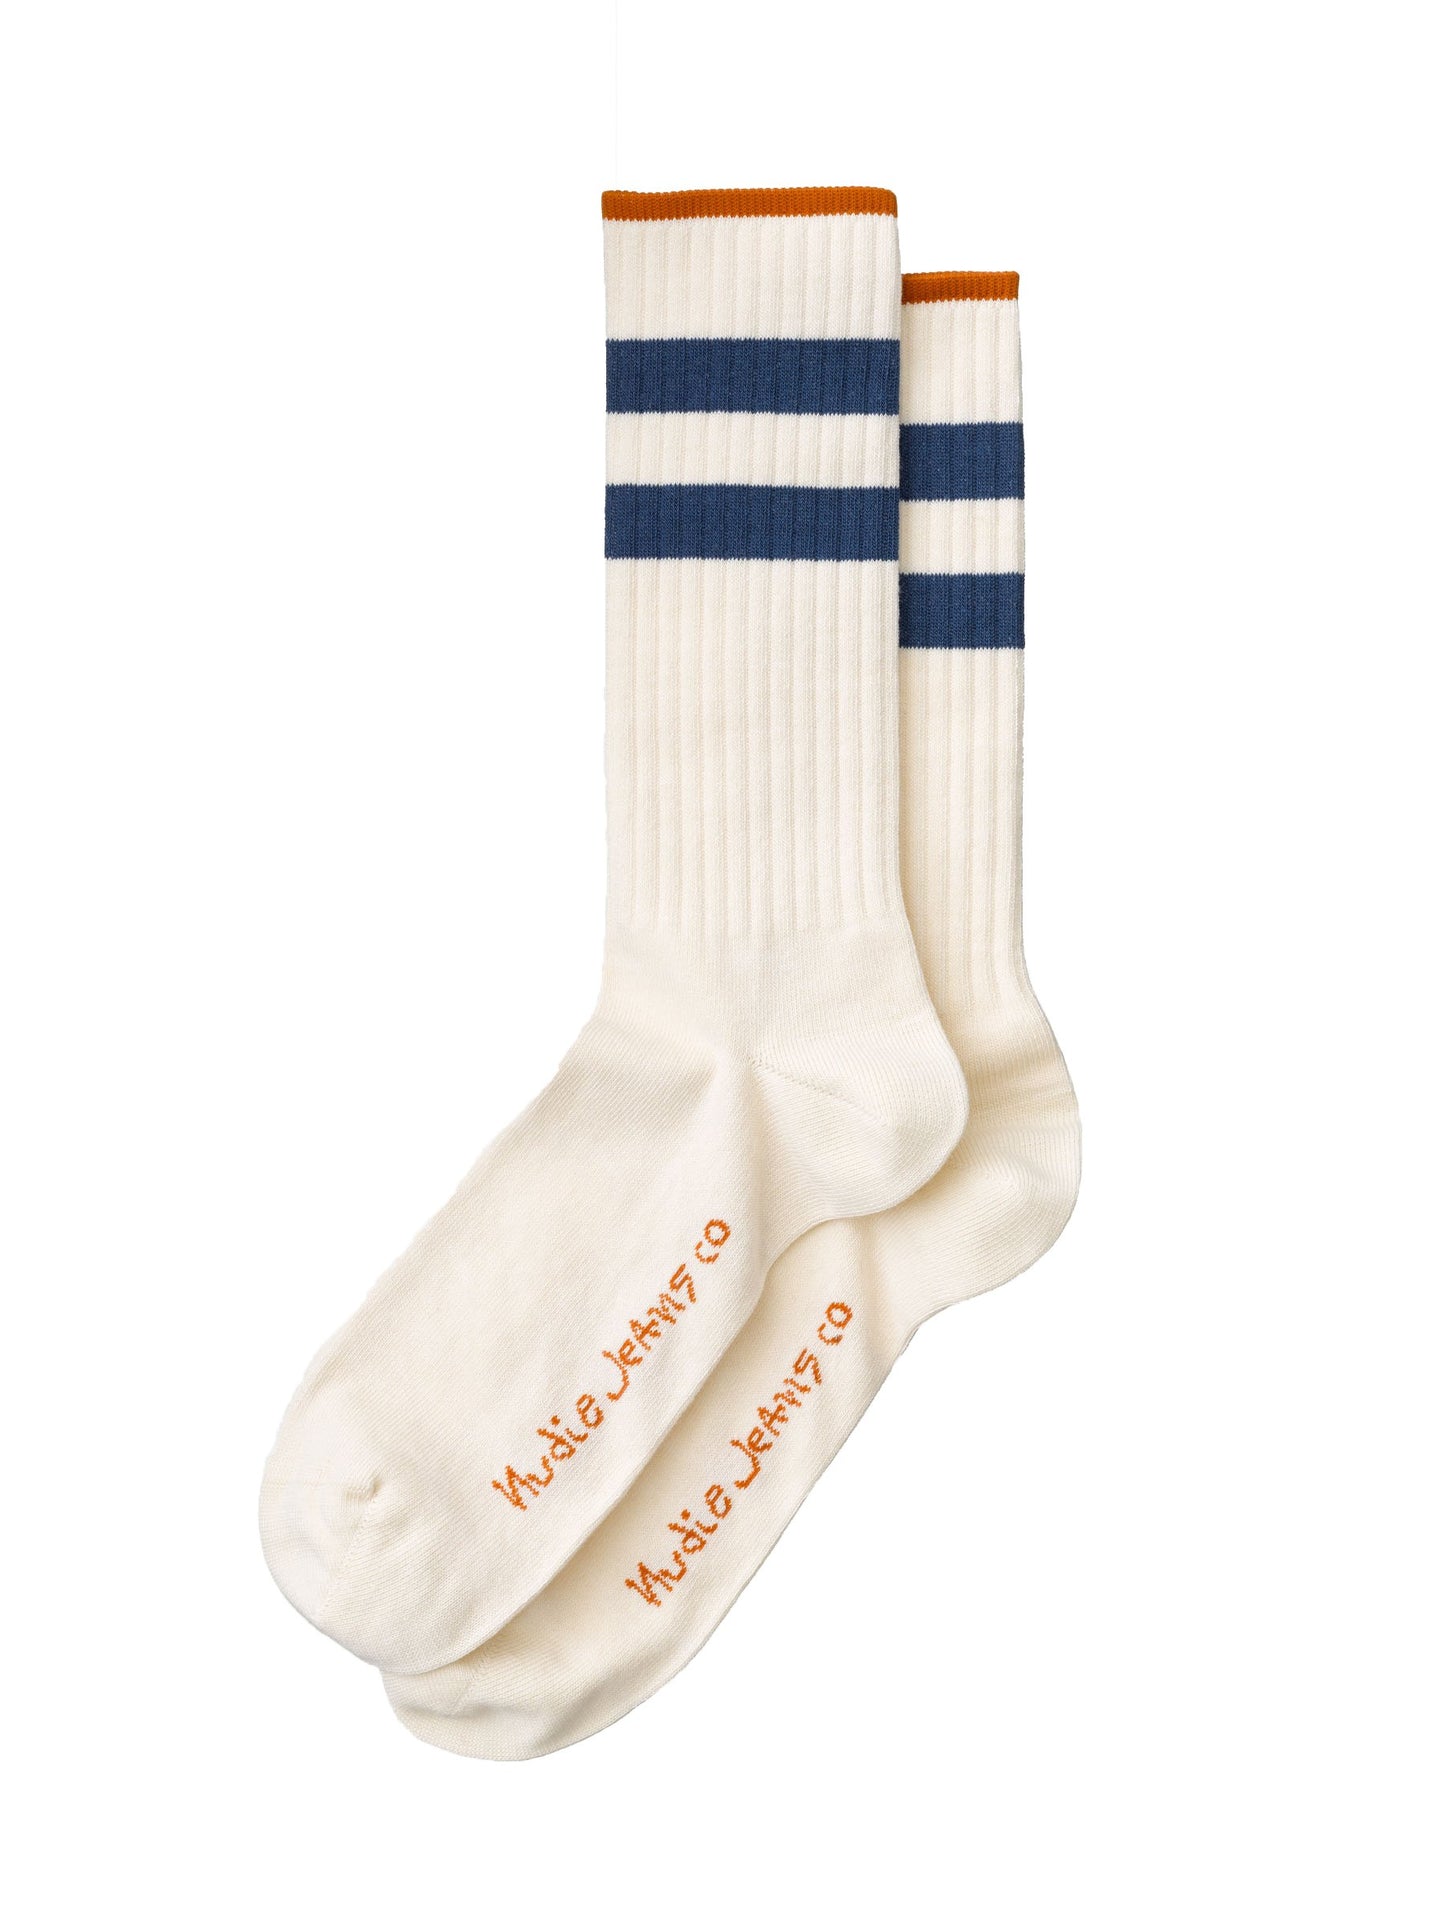 Nudie Jeans Co. Amundsson Sport Socks